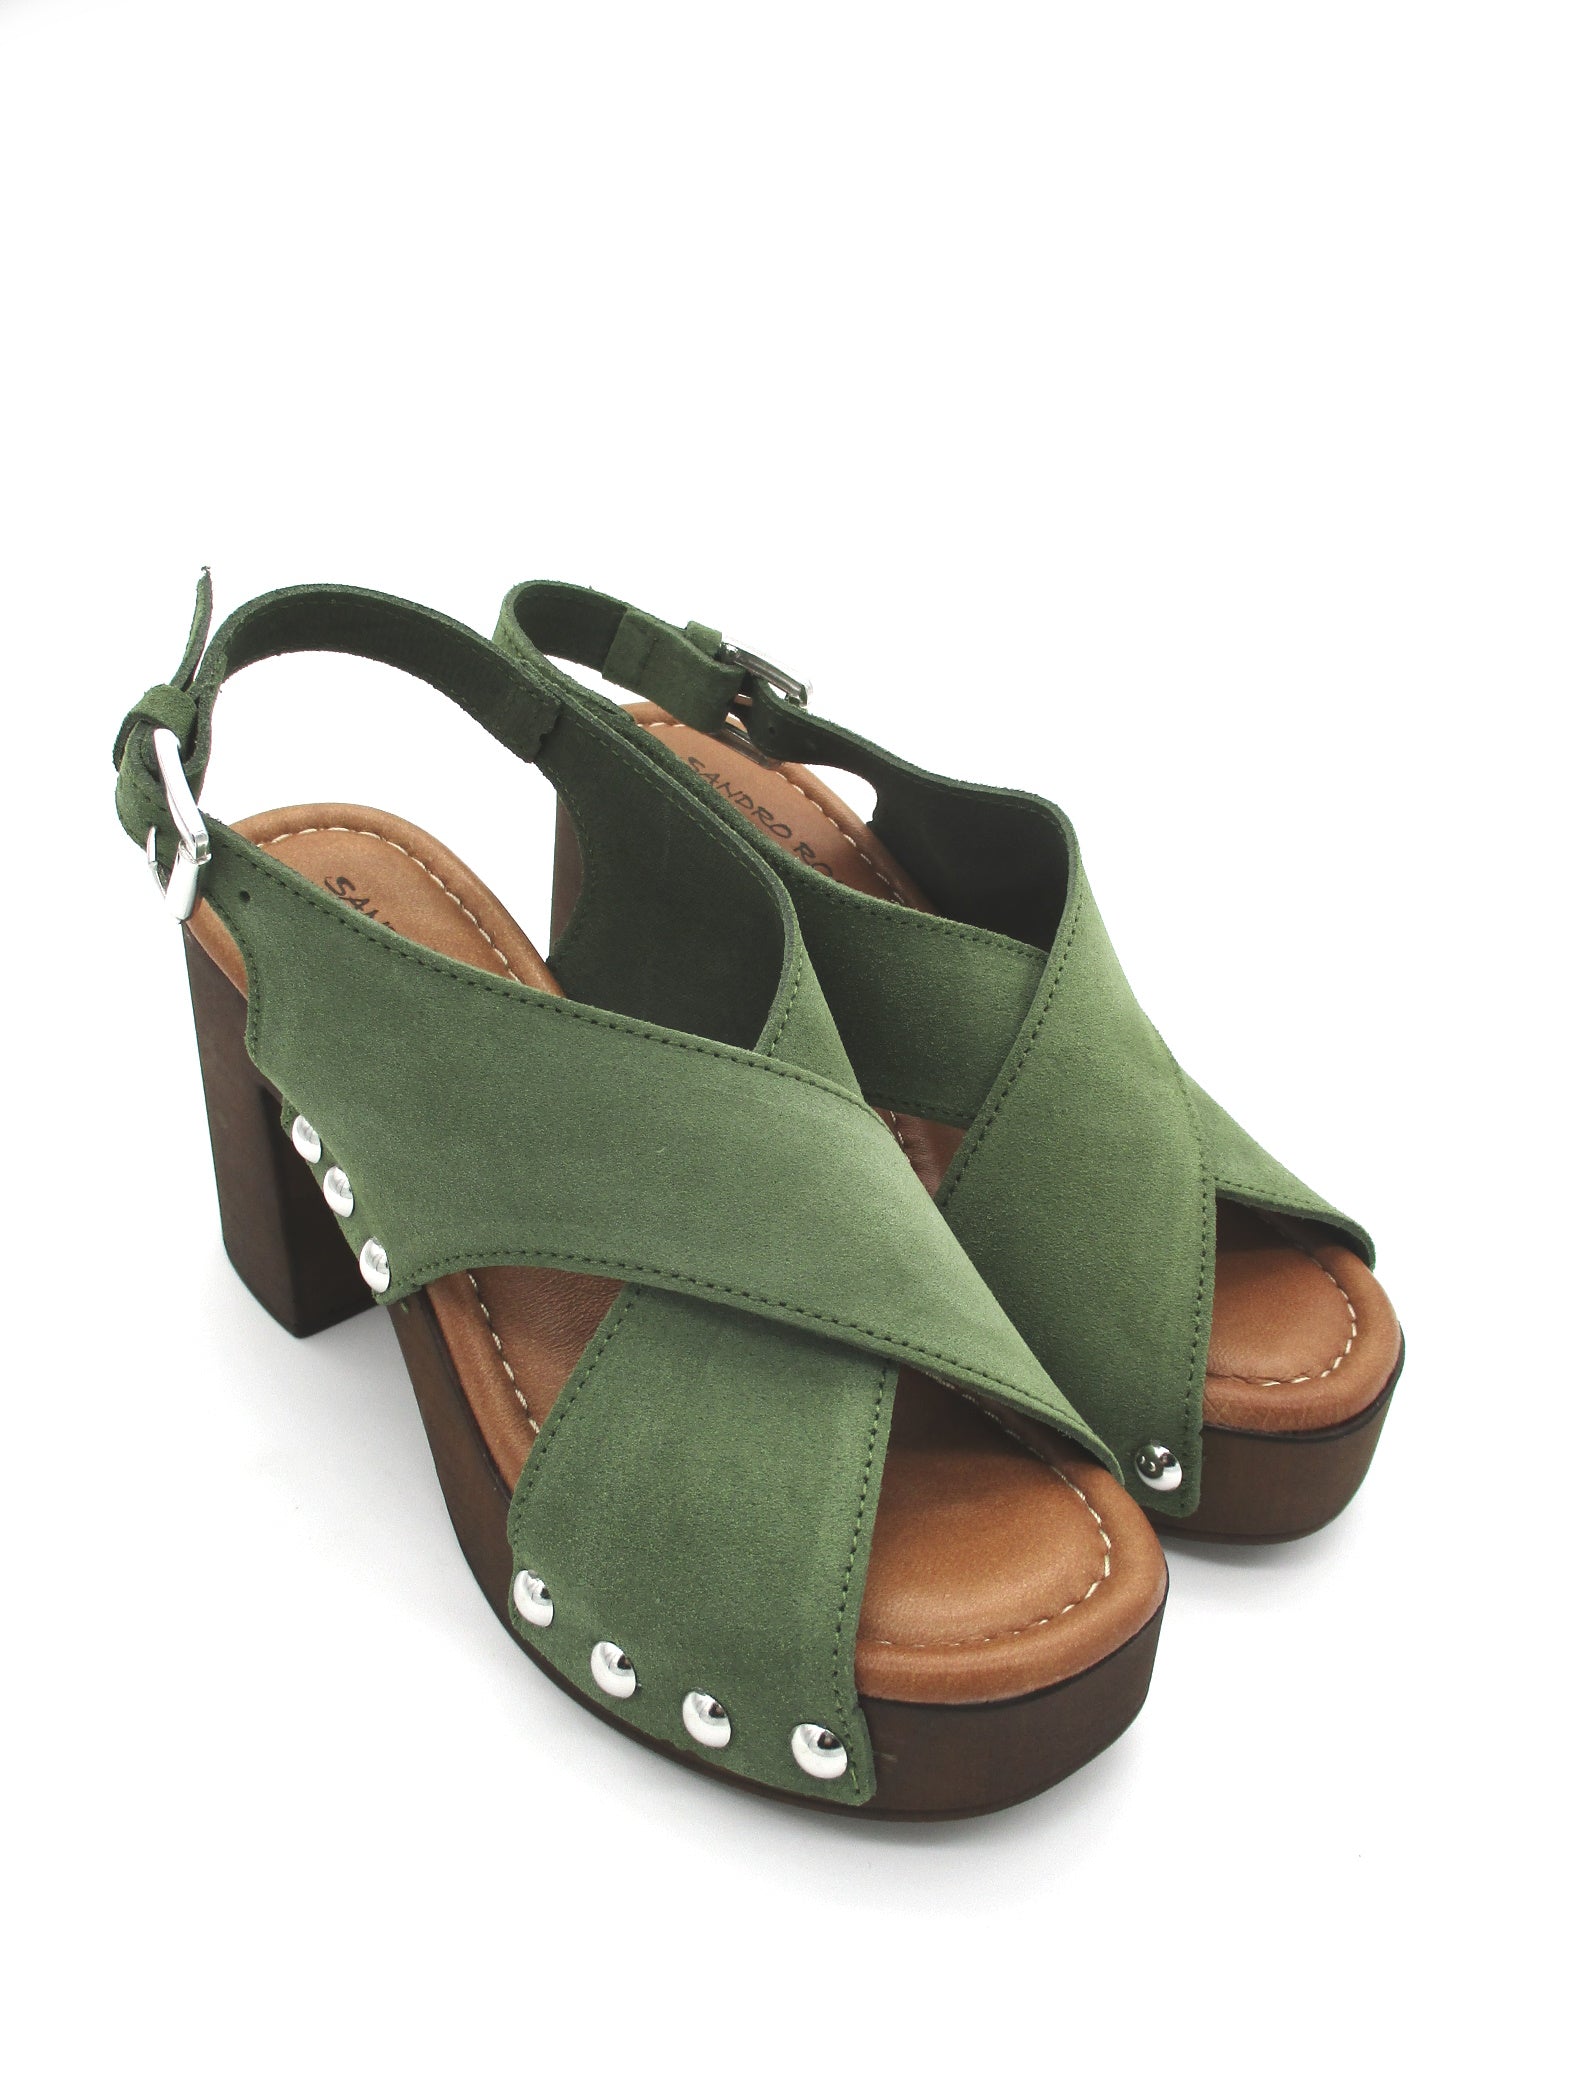 Sandalo zoccolo camoscio donna Valery Verde bosco - 8513 -